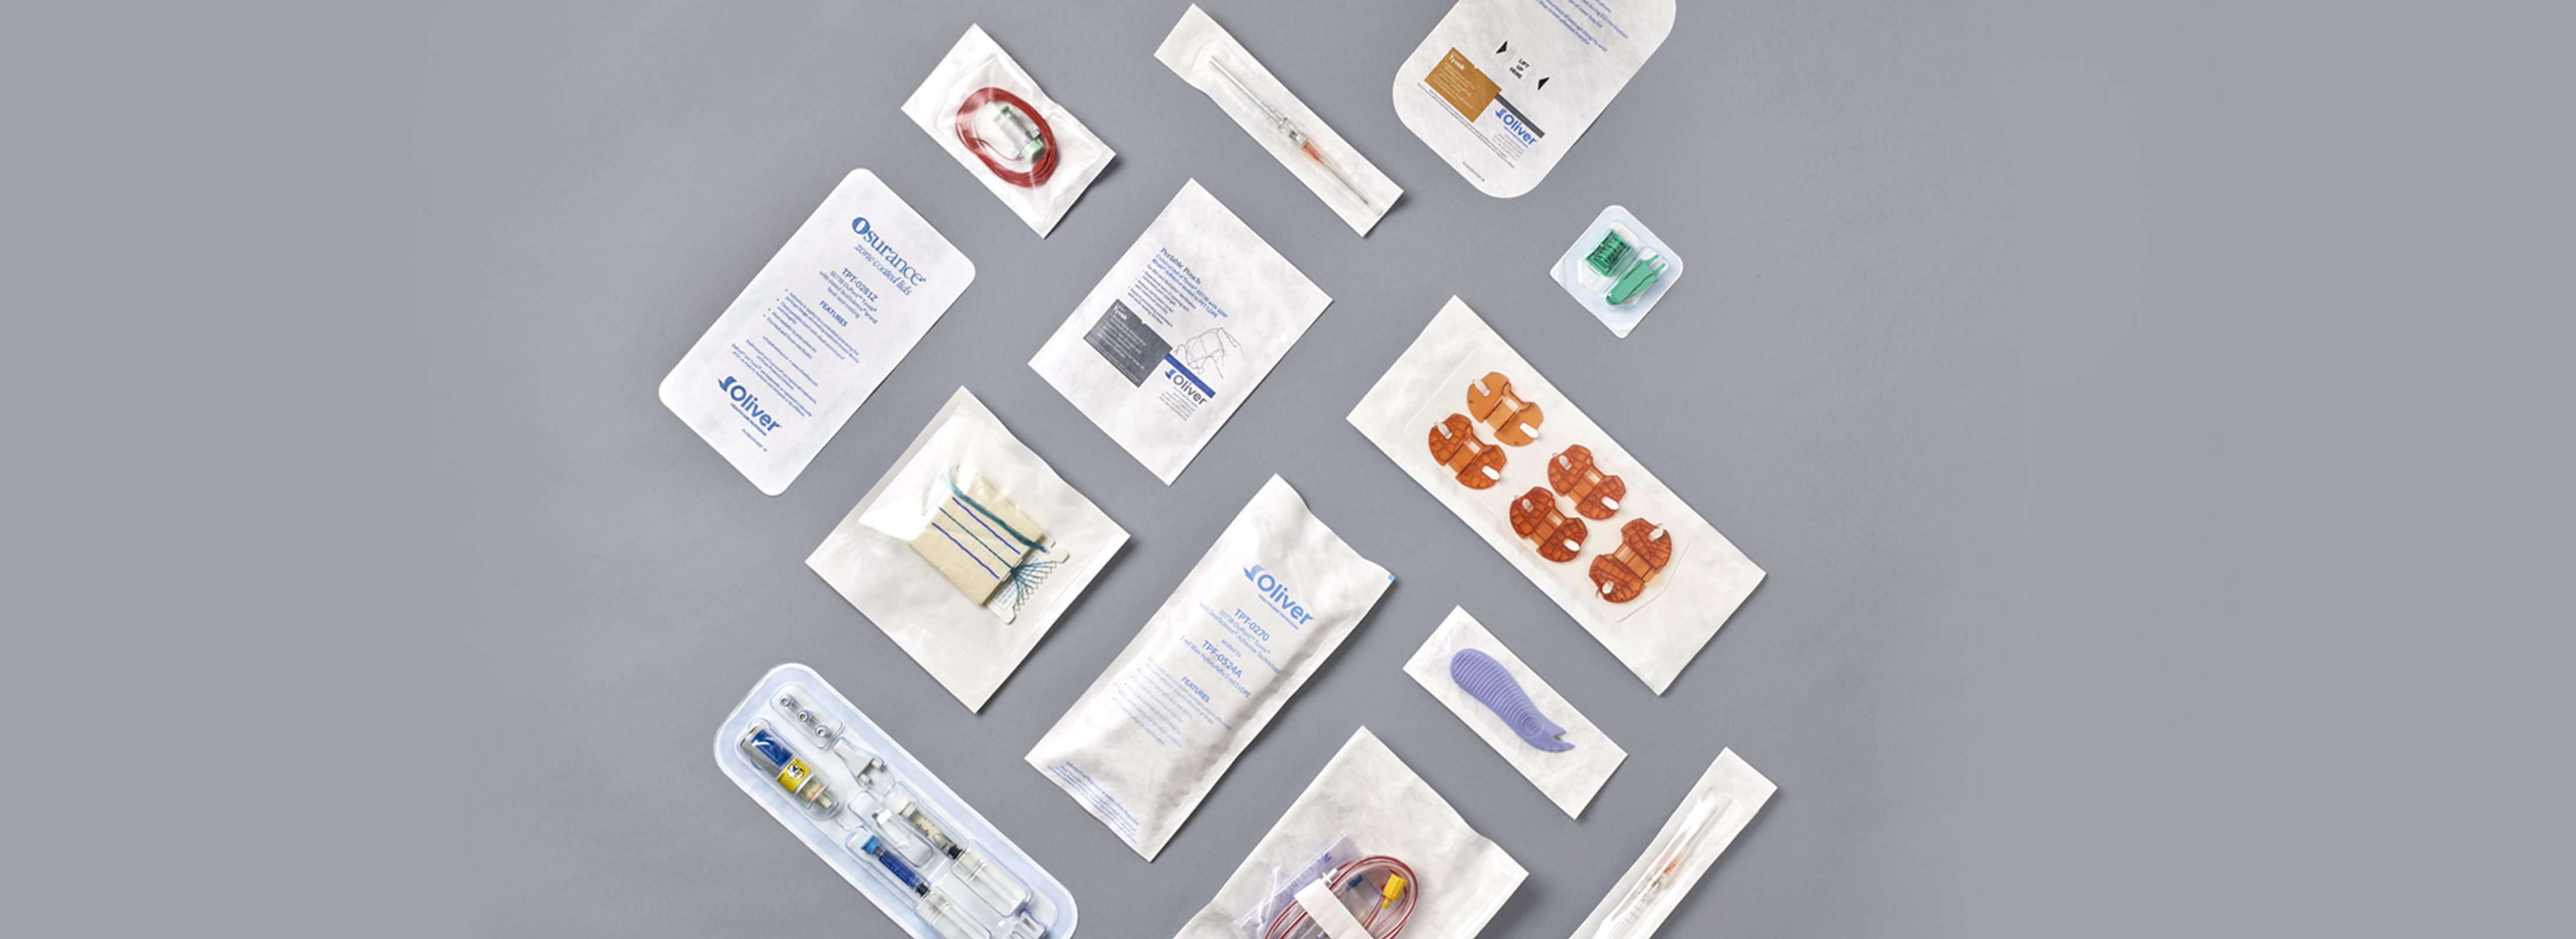 Heißsiegelfähige medizinische Verpackungs-Klebstoffe | Oliver Healthcare Packaging